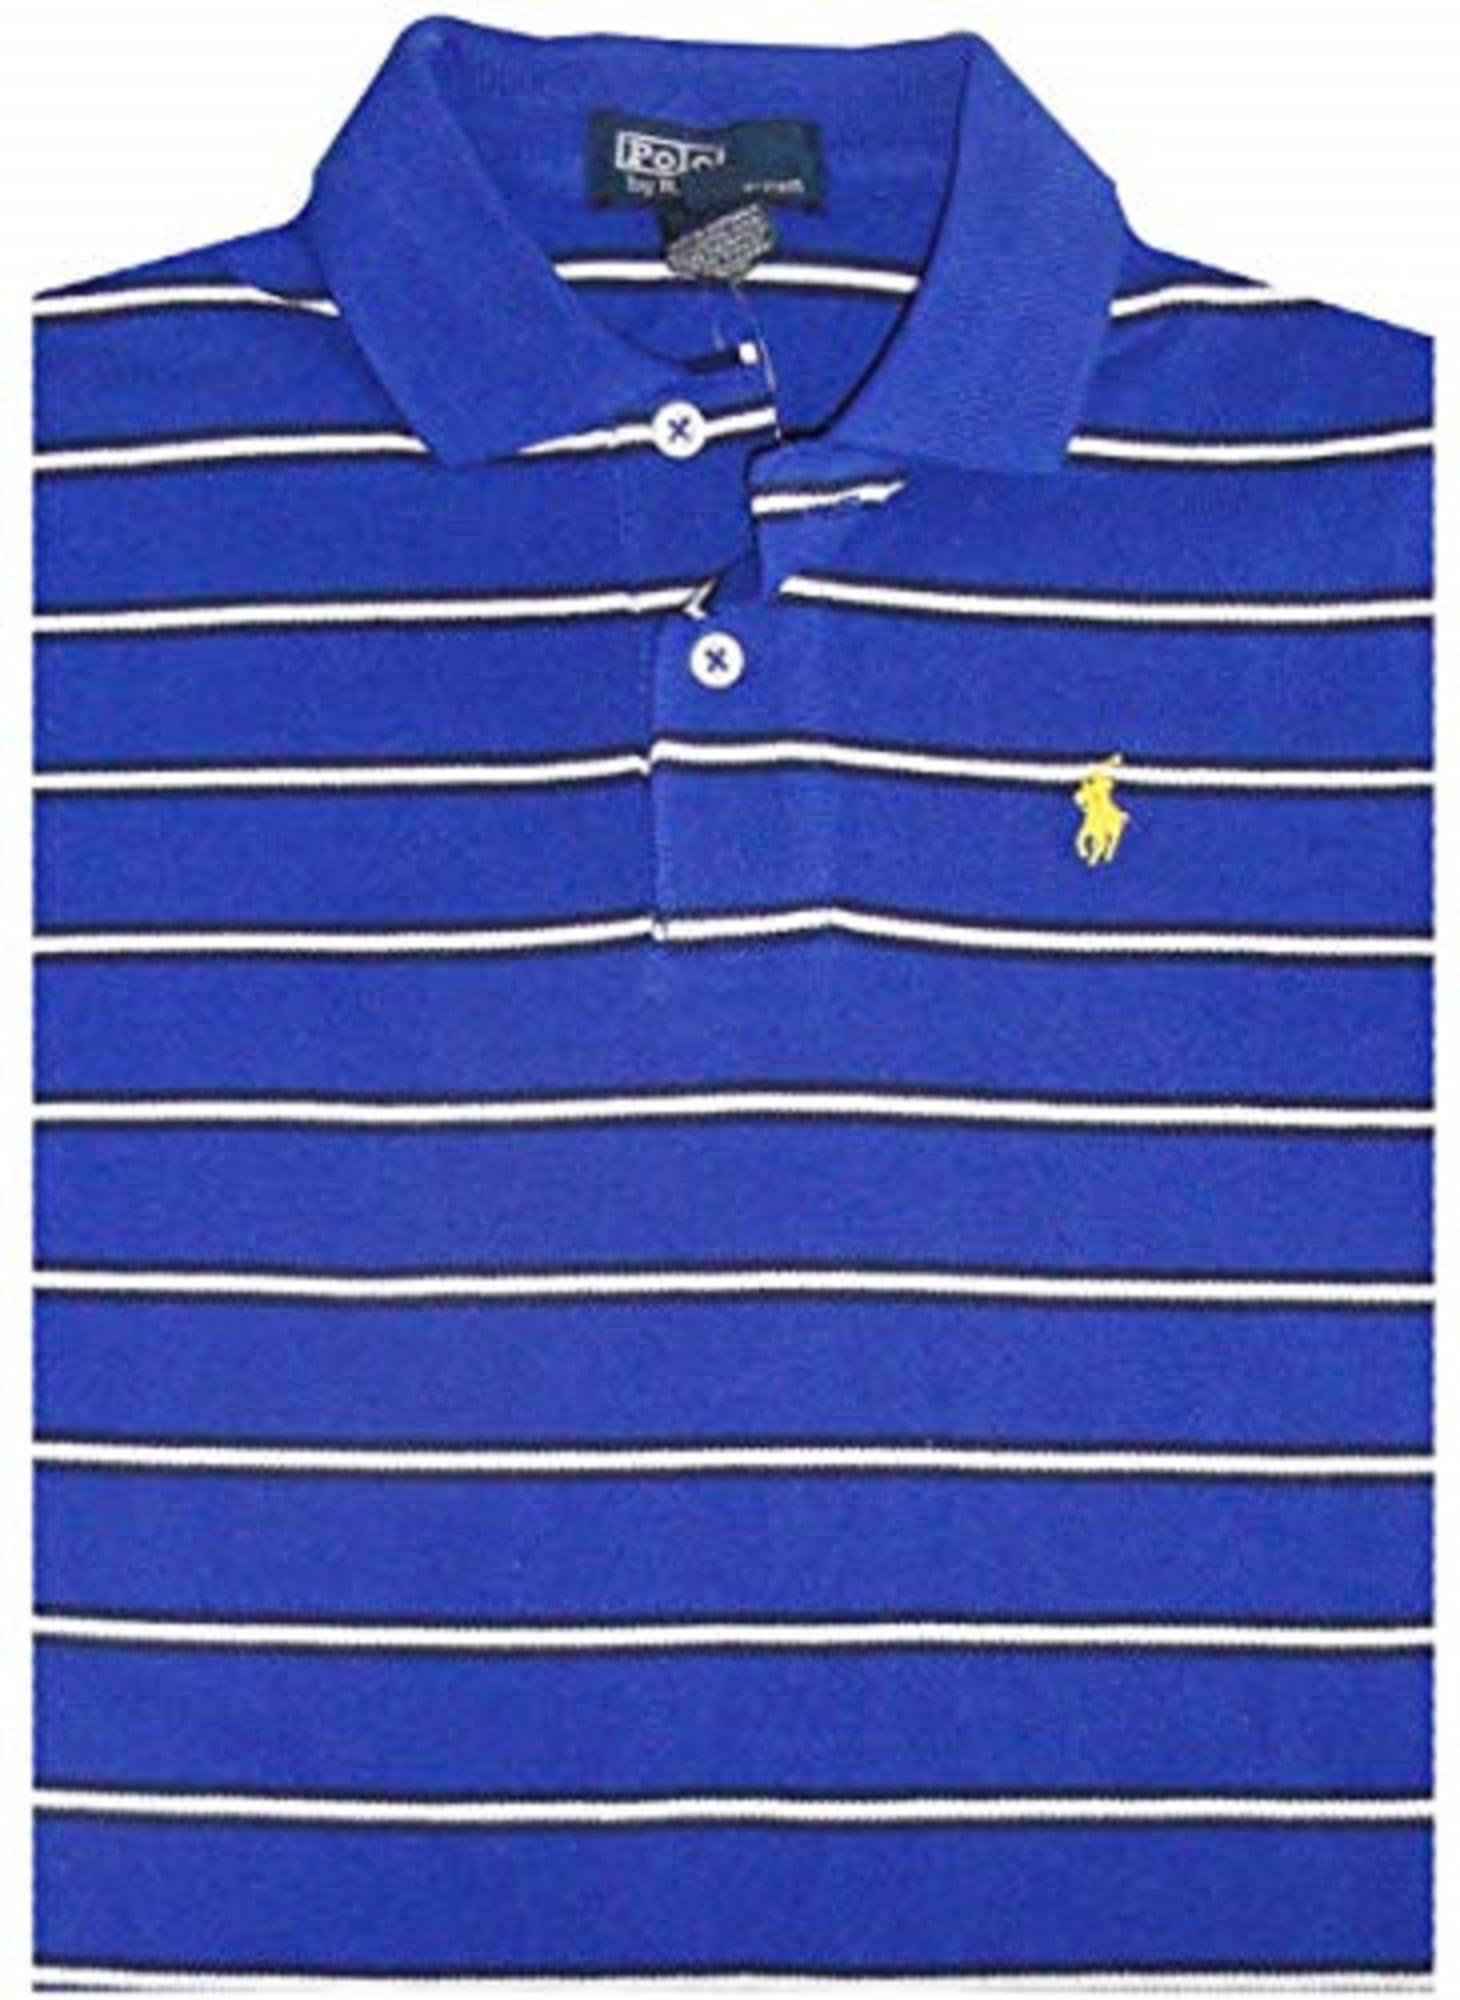 blue and yellow ralph lauren polo shirt